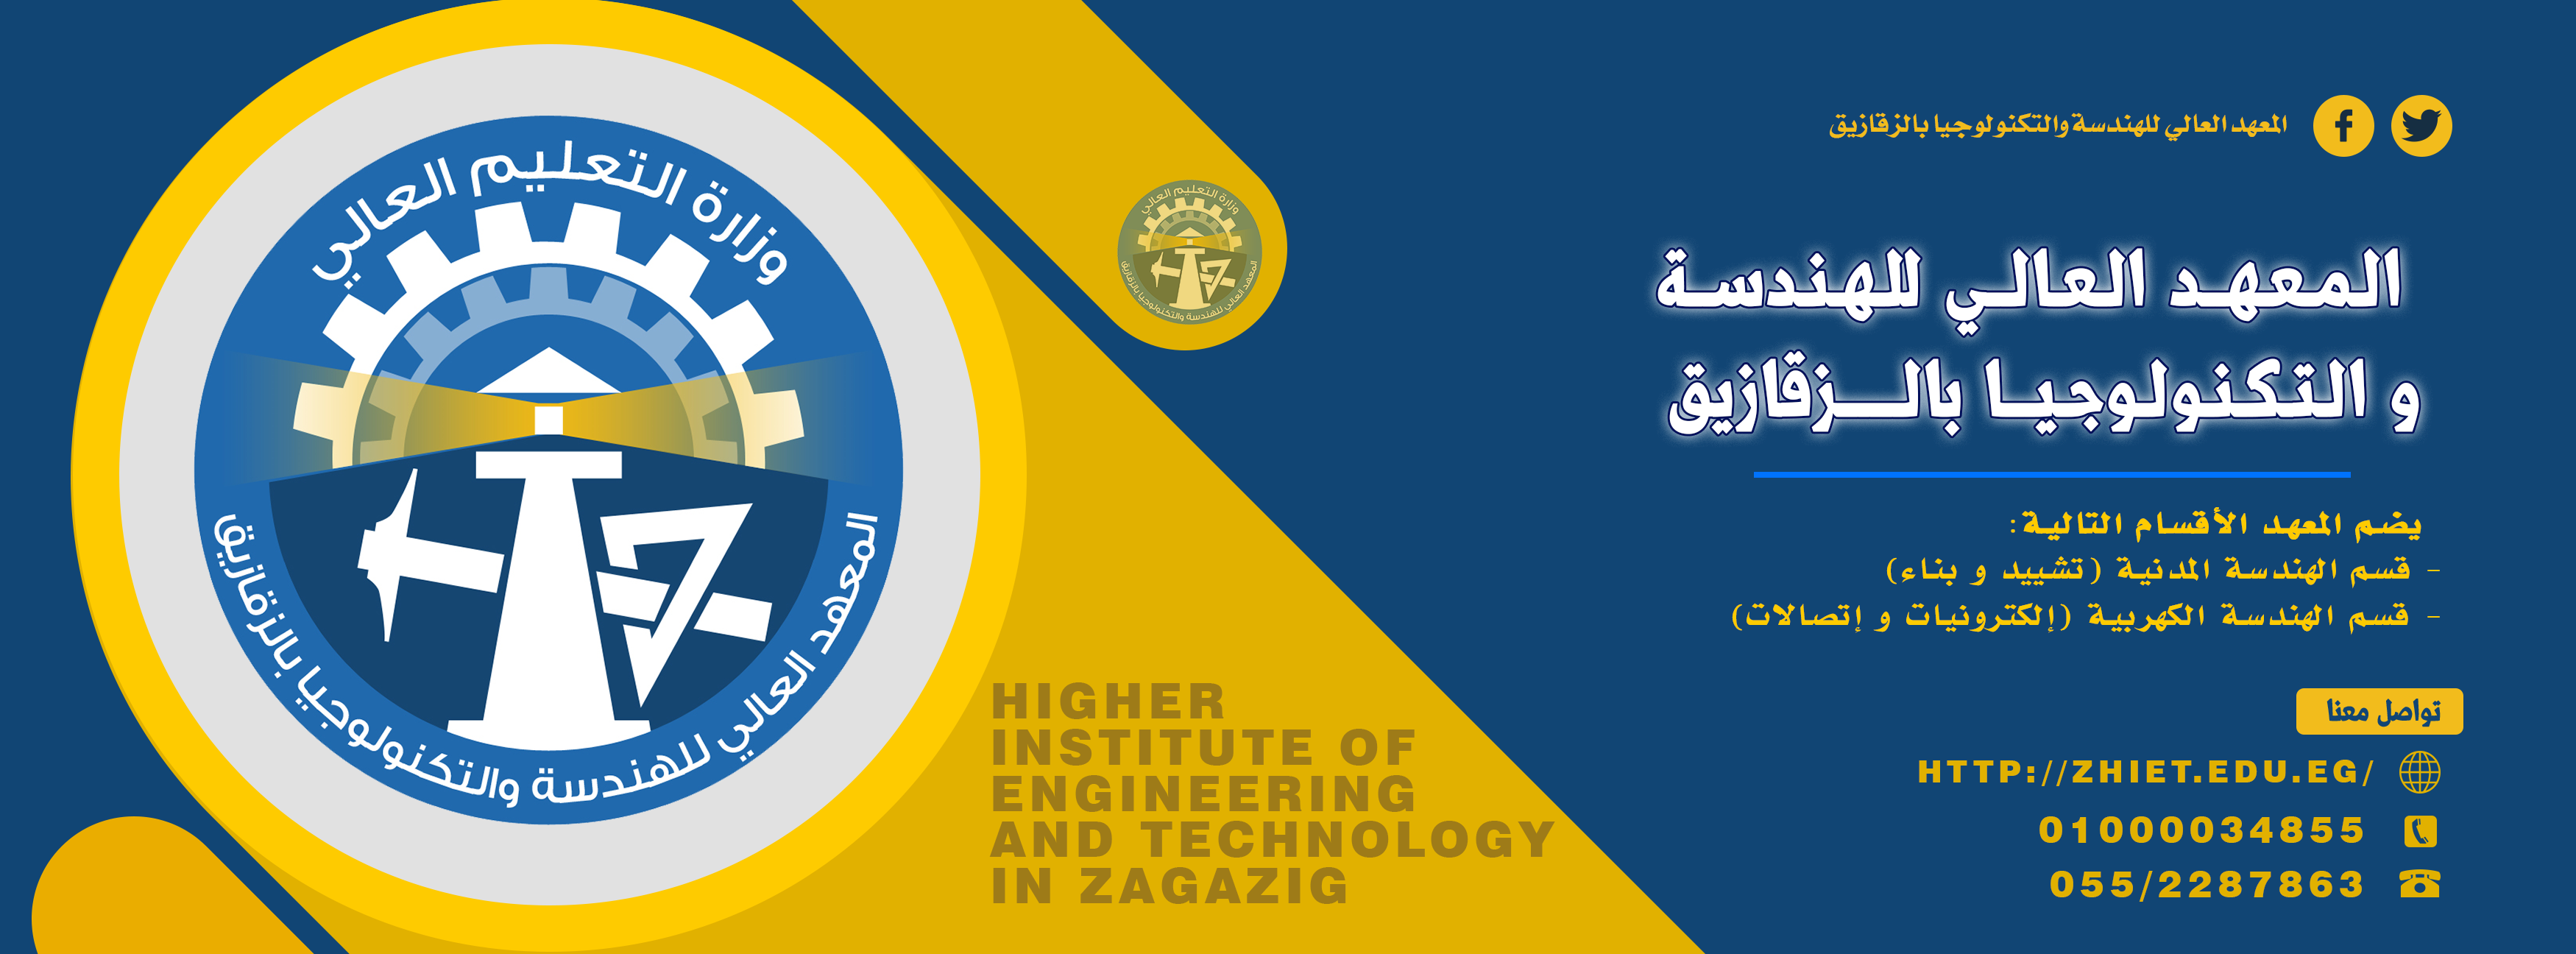 Zagazig higher institute engineering tecnology